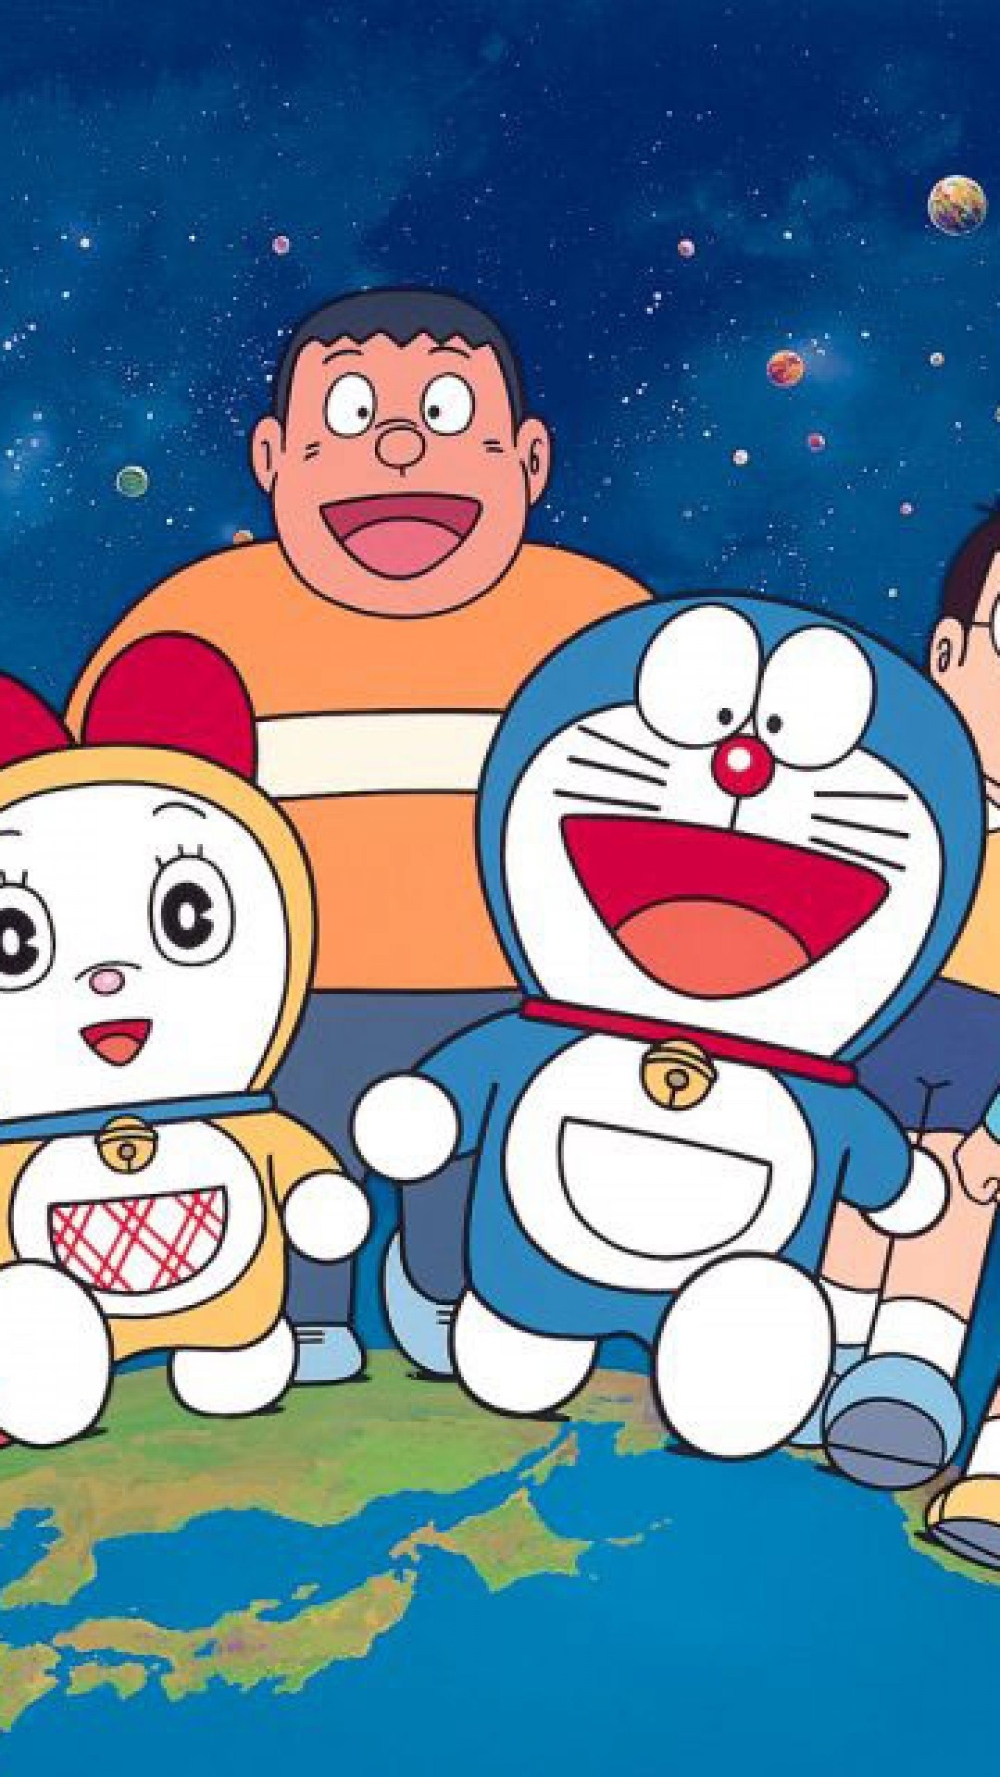 Cute Doraemon - Friends